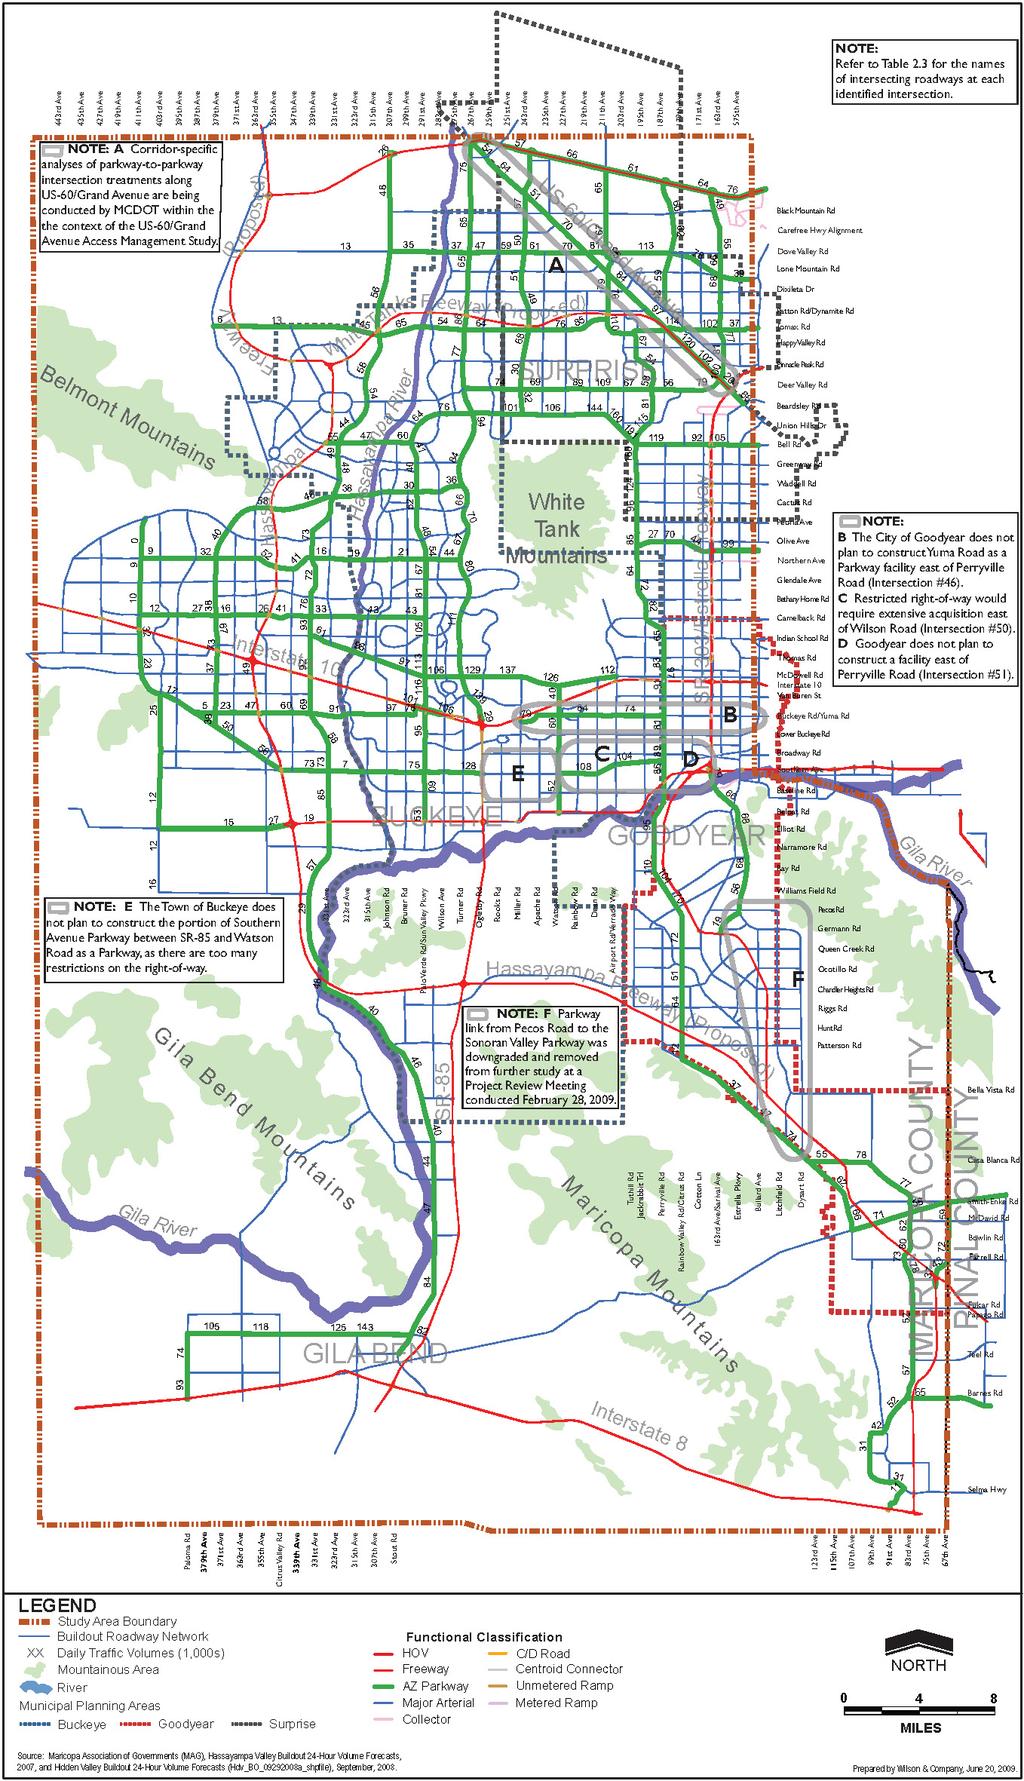 Arizona Parkway /Interchange - Operational Analysis and Design Concepts